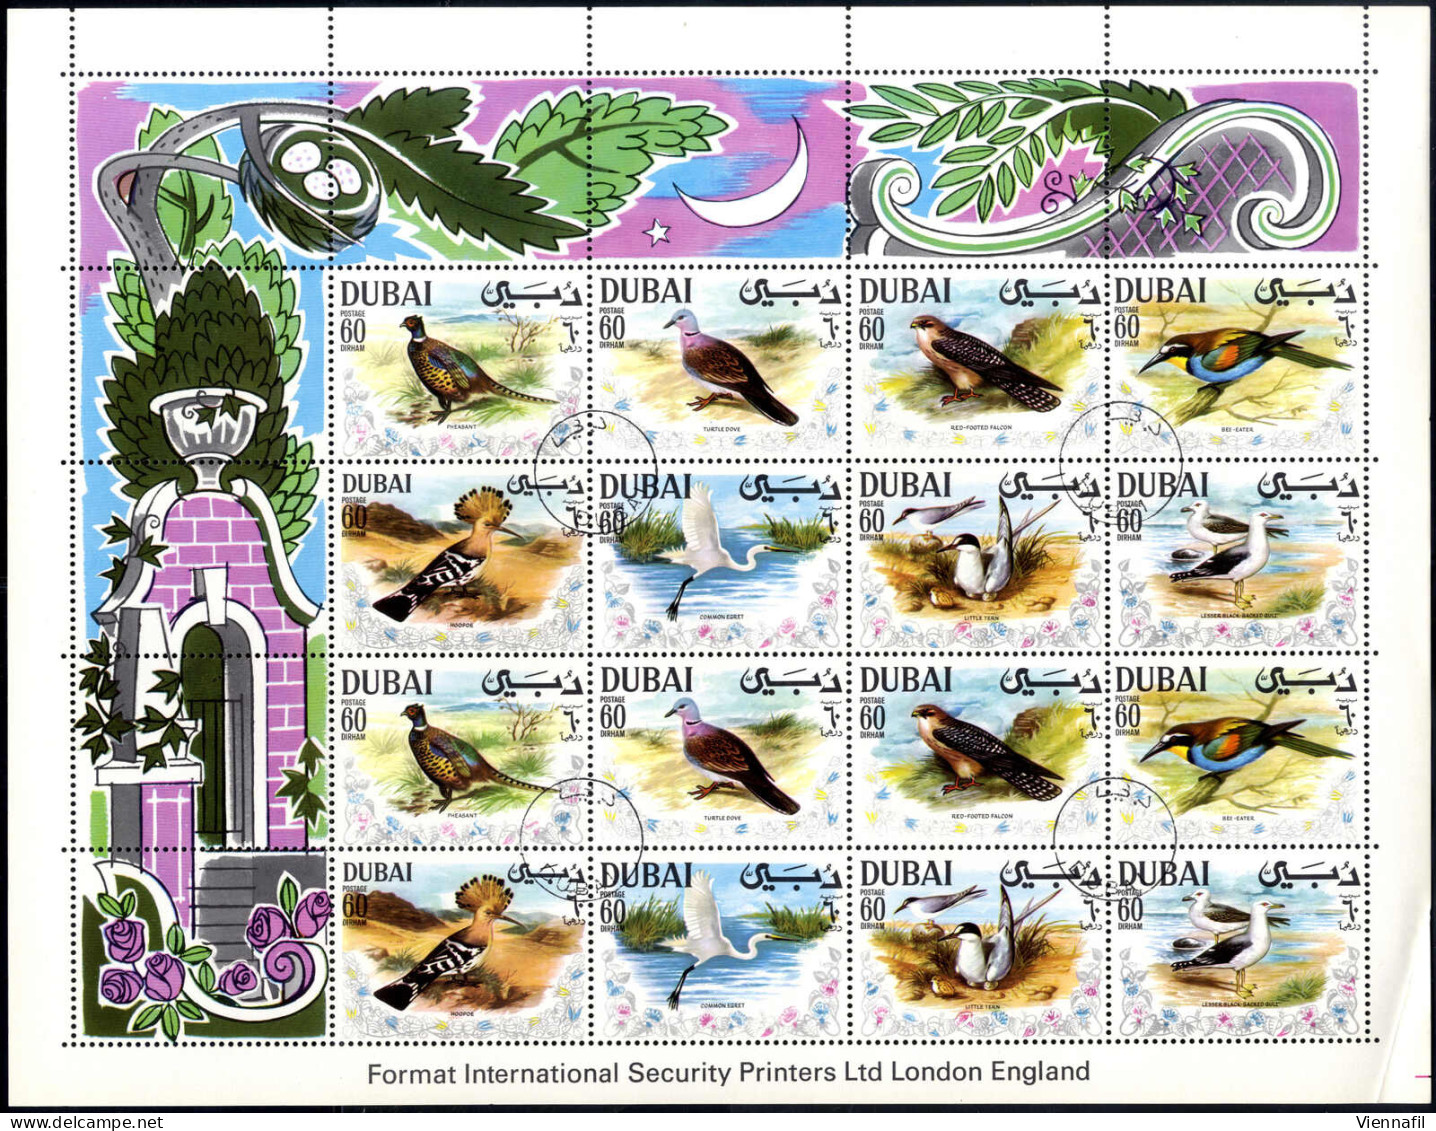 O 2007/08, 82 Bögen Zu Je 2 Serien Zu 8 Werten Vögel Und 24 Bögen Zu Je 2 Serien Zu Je 8 Werten Fische, Alle Vorausentwe - Dubai